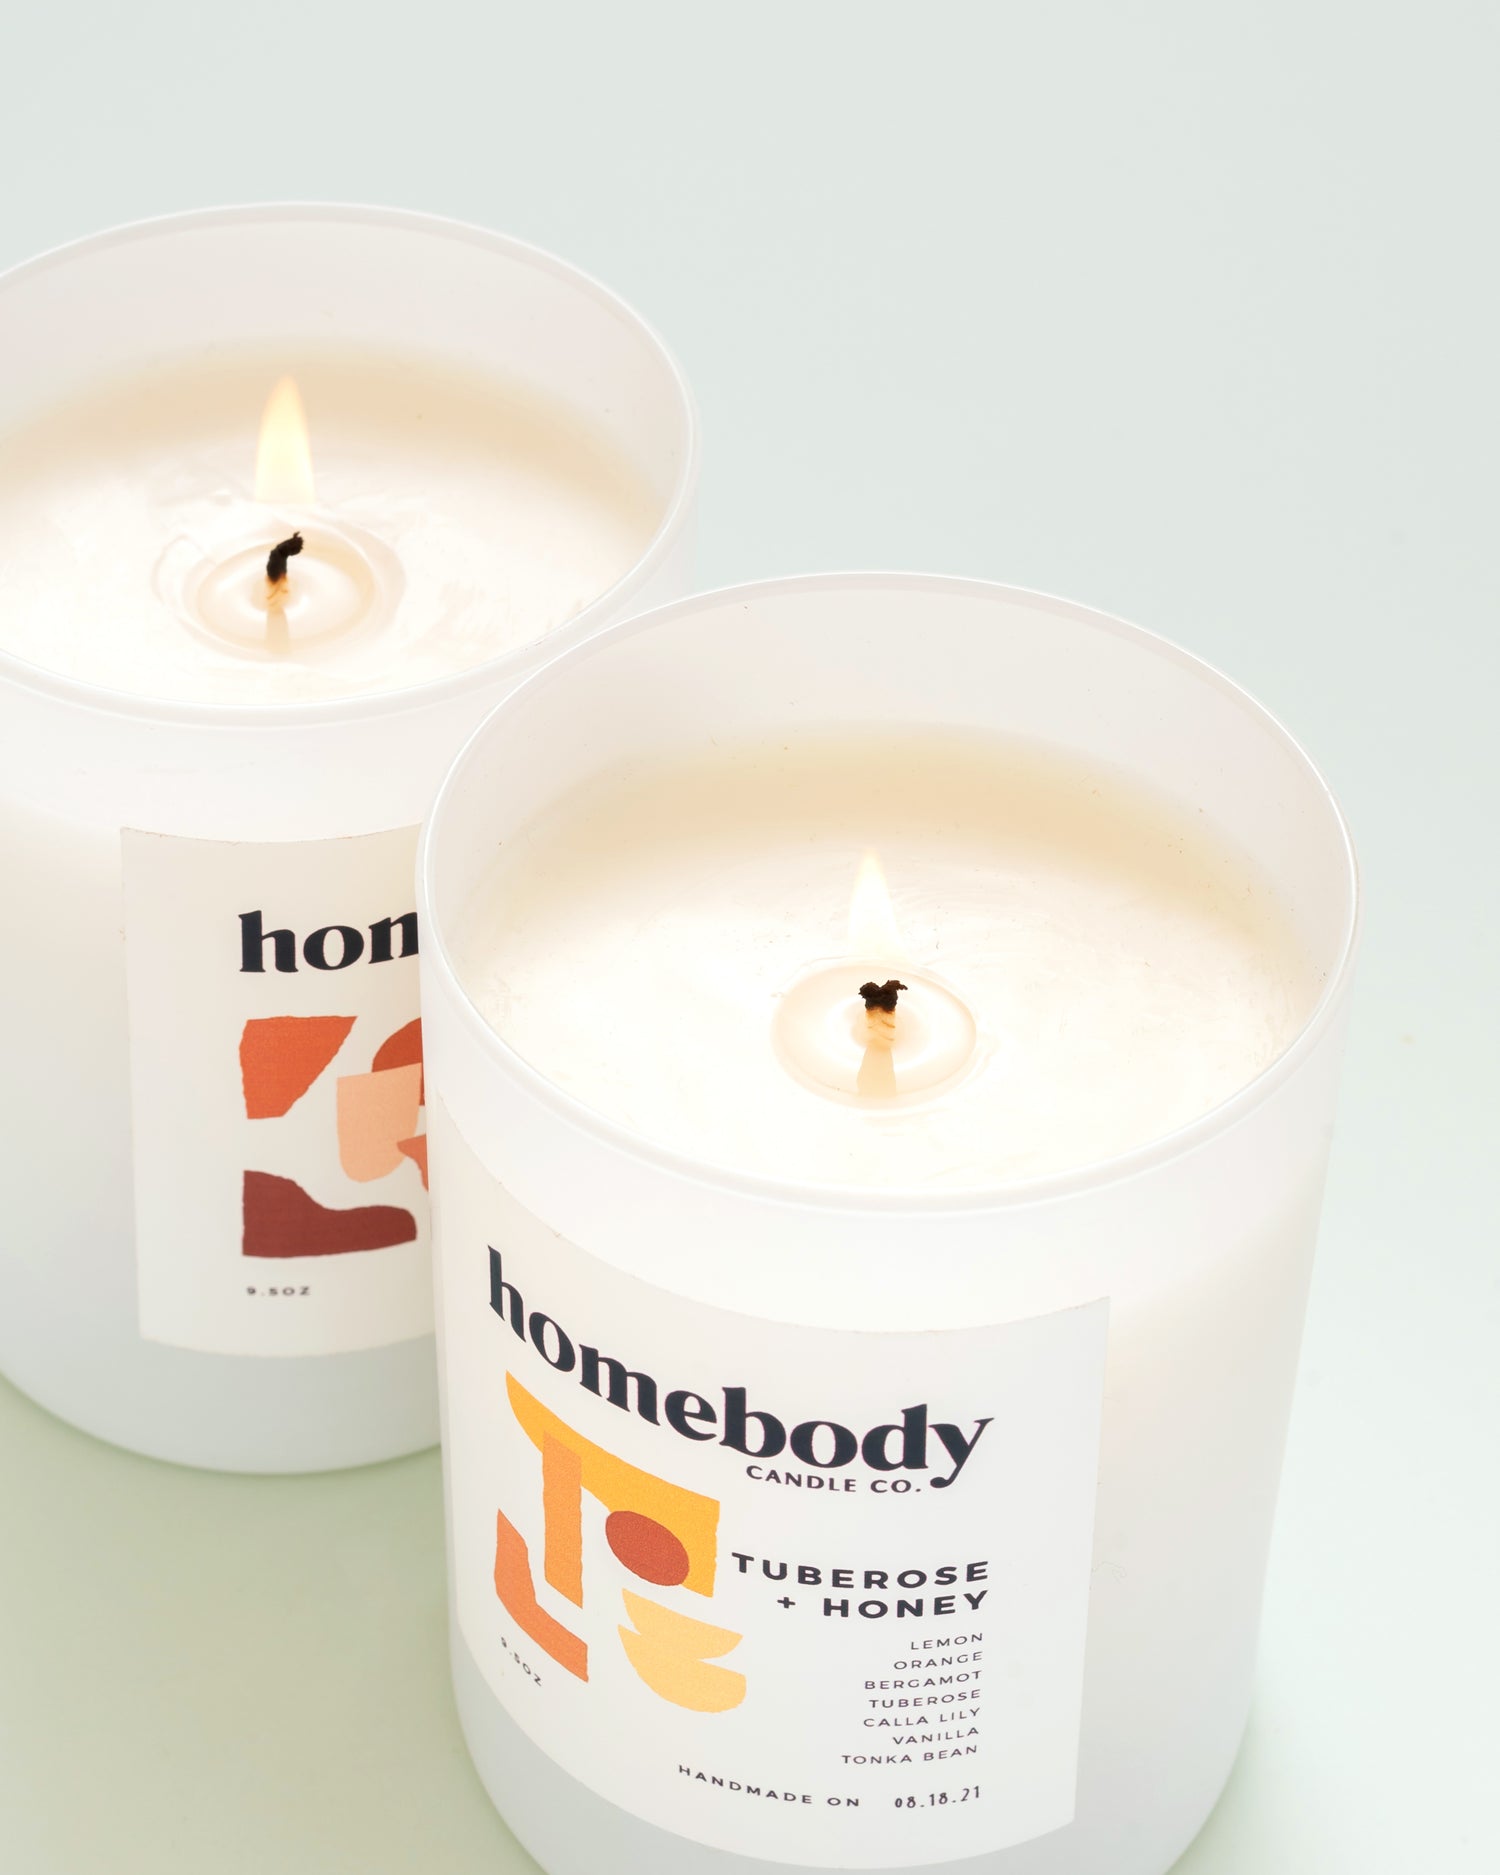 Aurora Borealis-Burn + Bloom-burn + bloom candle-Homebody Candle Co.